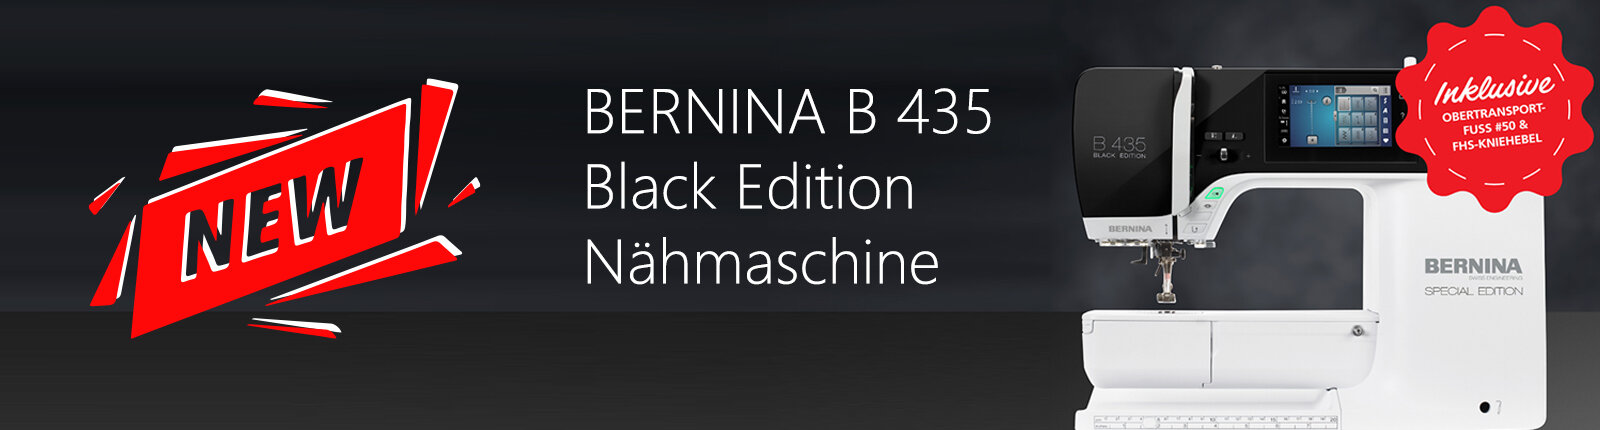 Bernina Nähmaschine Black Edition B 435